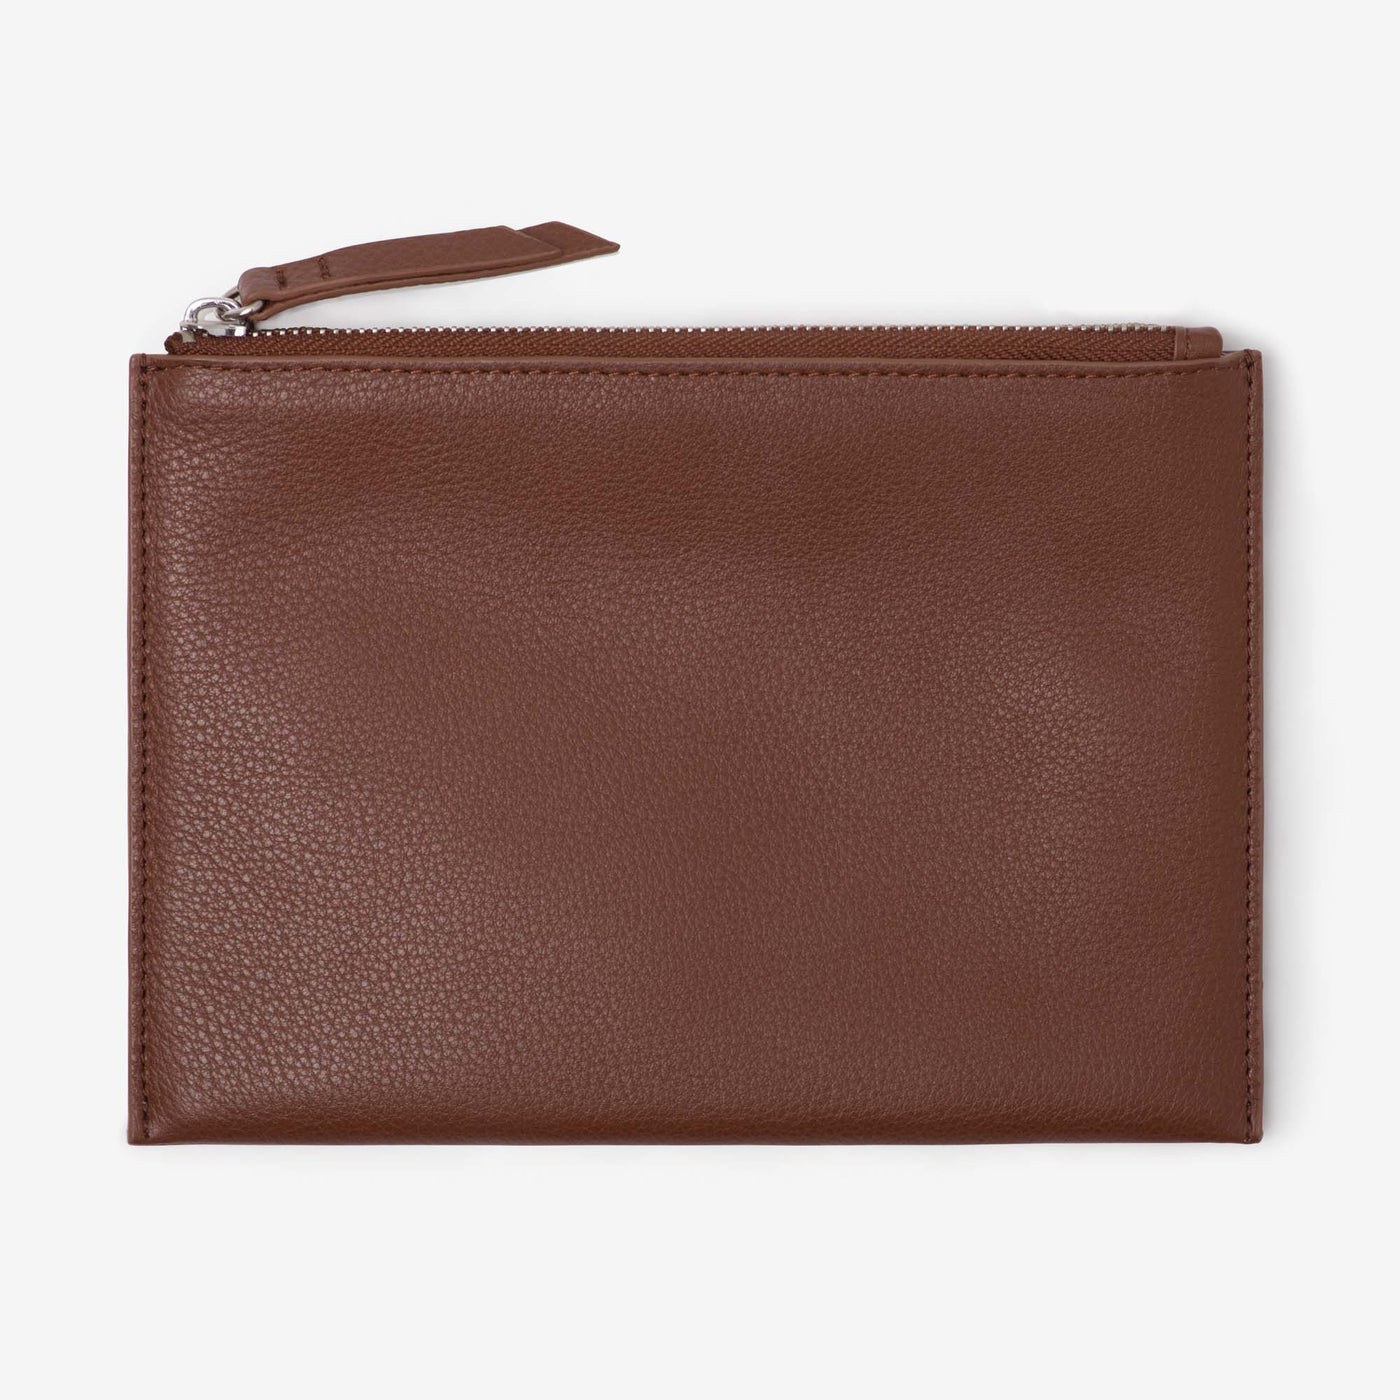 Leather Mini Clutch + Leather Key Ring/ Bag Tassel Gift Set – Tan